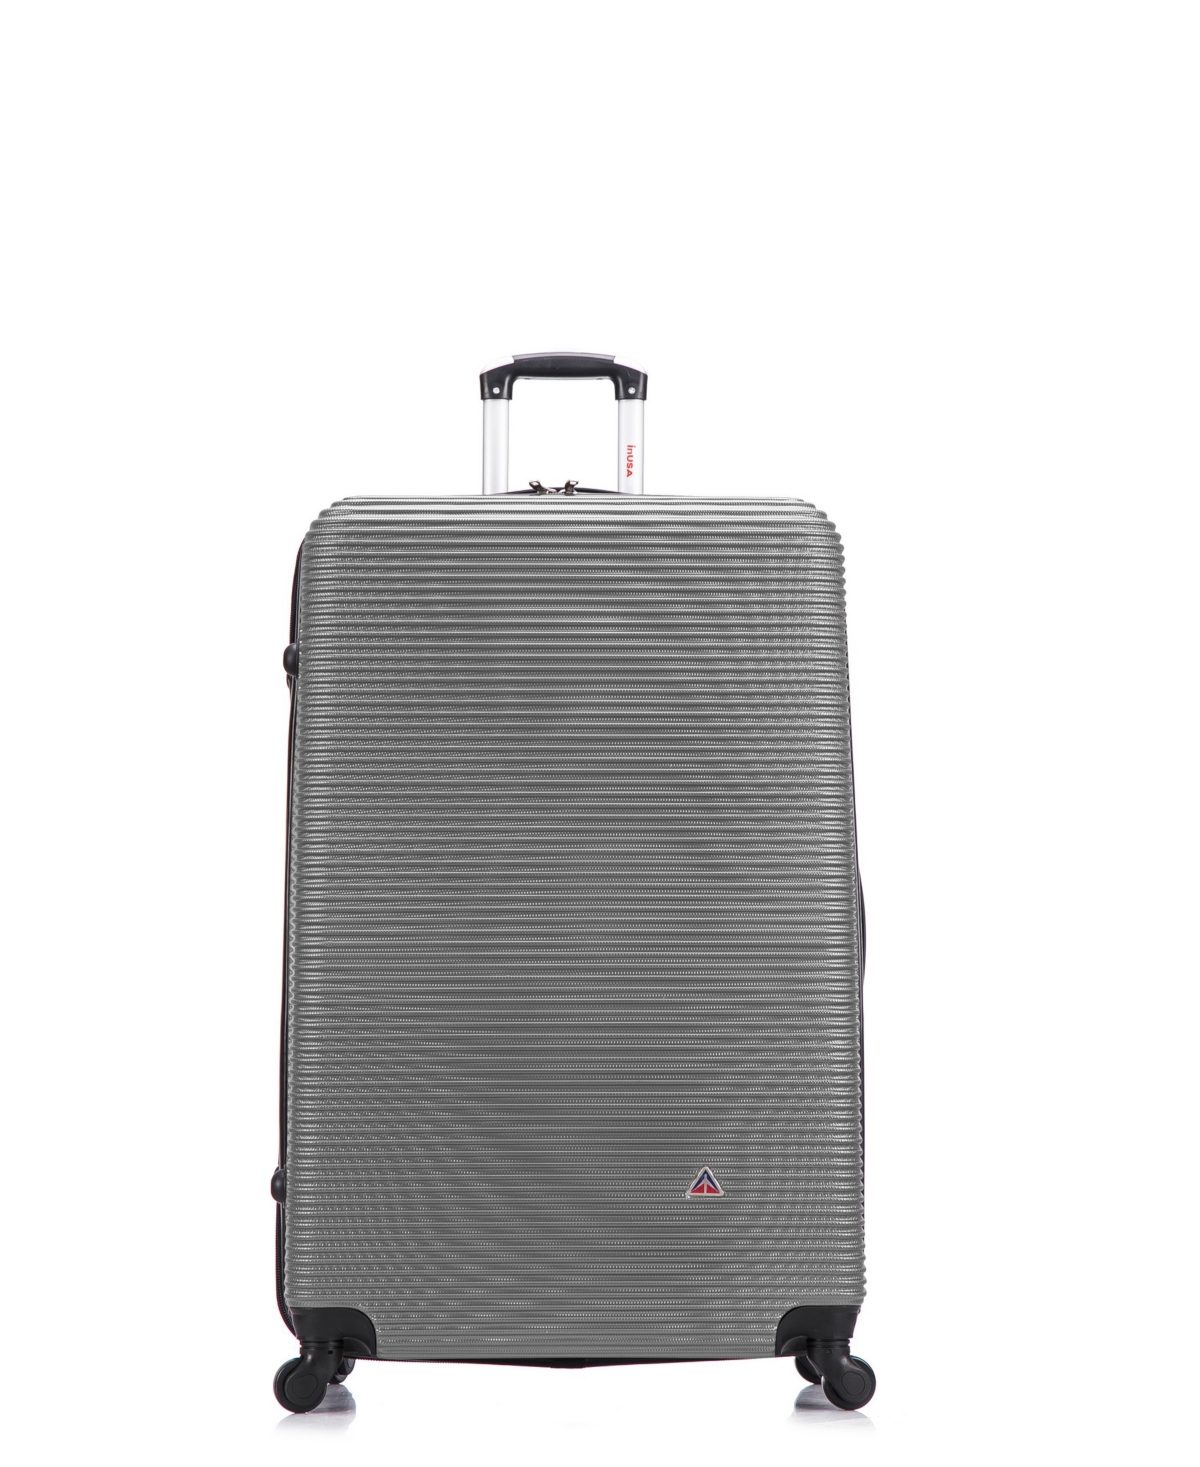 Royal 32" Lightweight Hardside Spinner Luggage - Orange